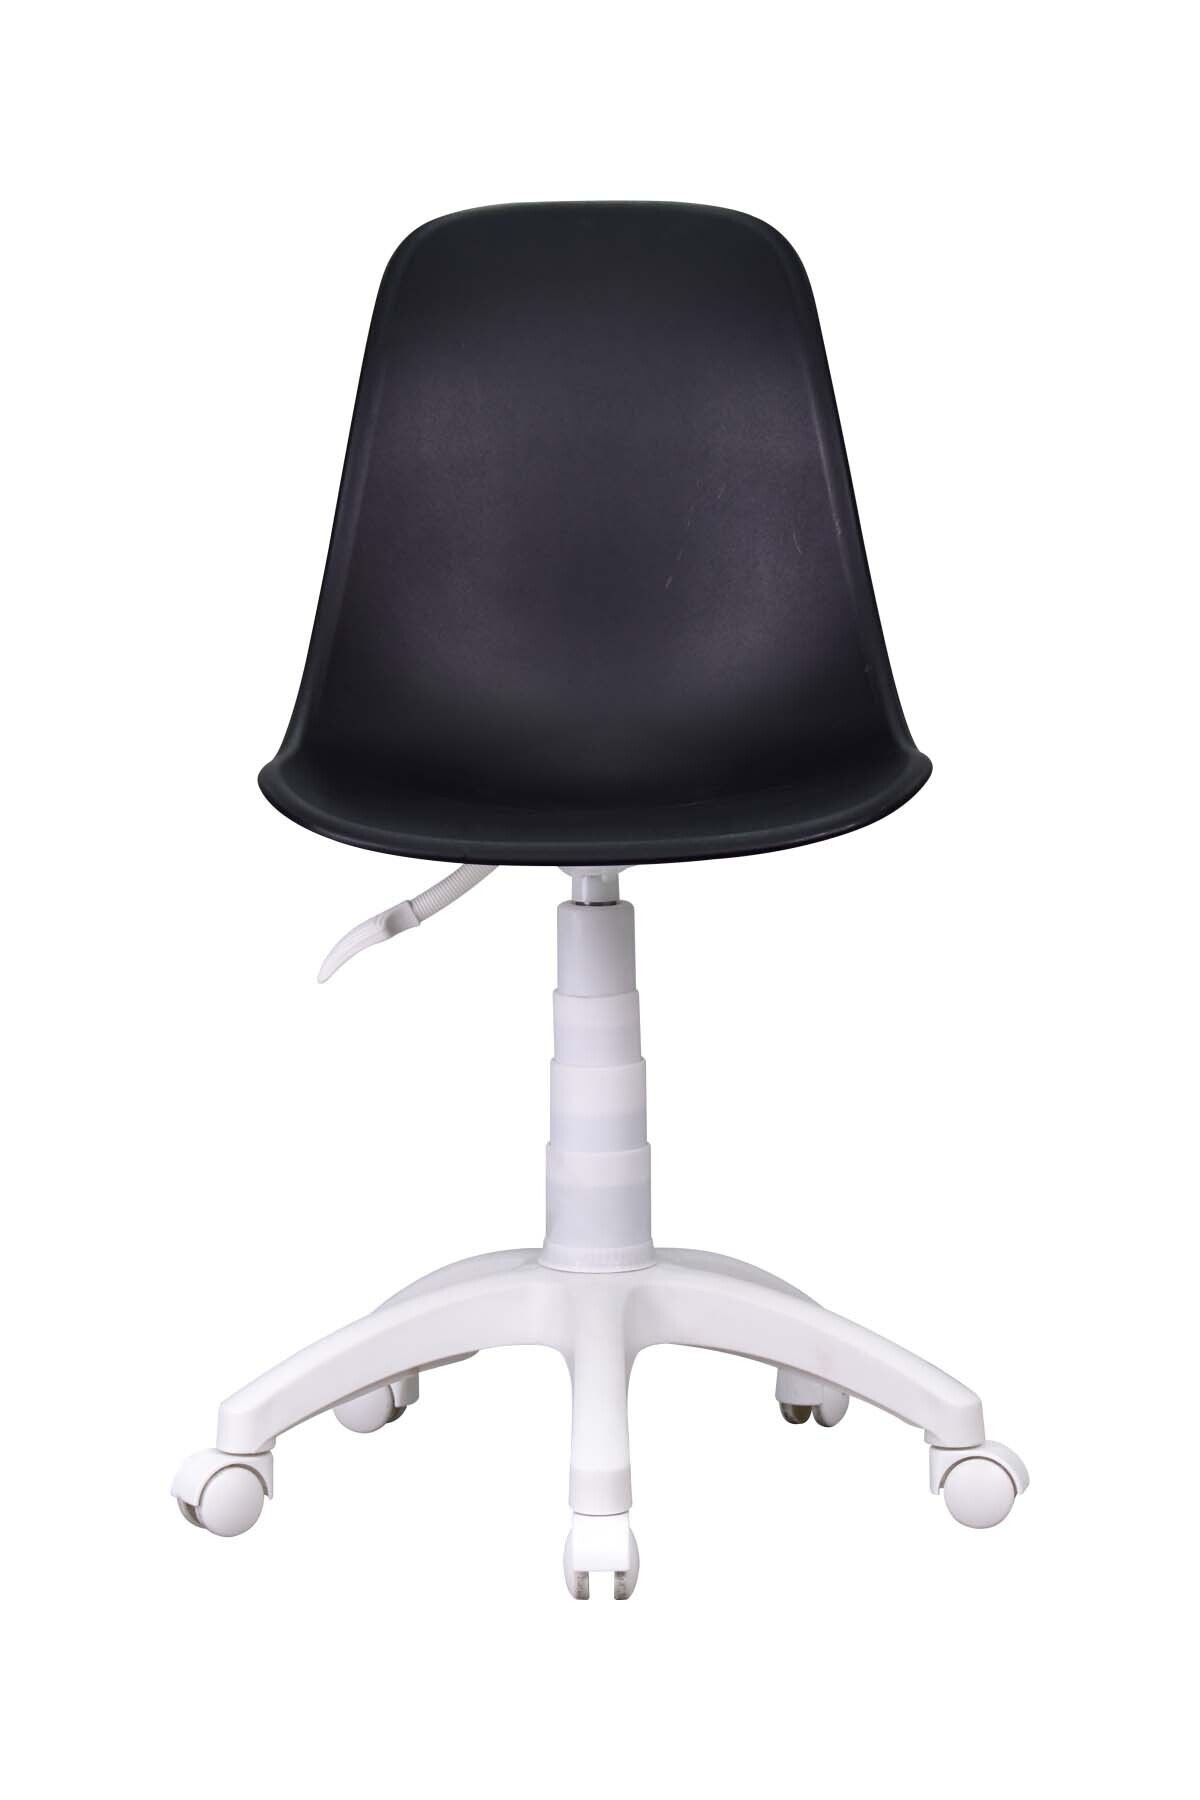 VİLİNZE Vilinze Eames Çalışma Koltuğu Tekerlekli Ofis Sandalyesi